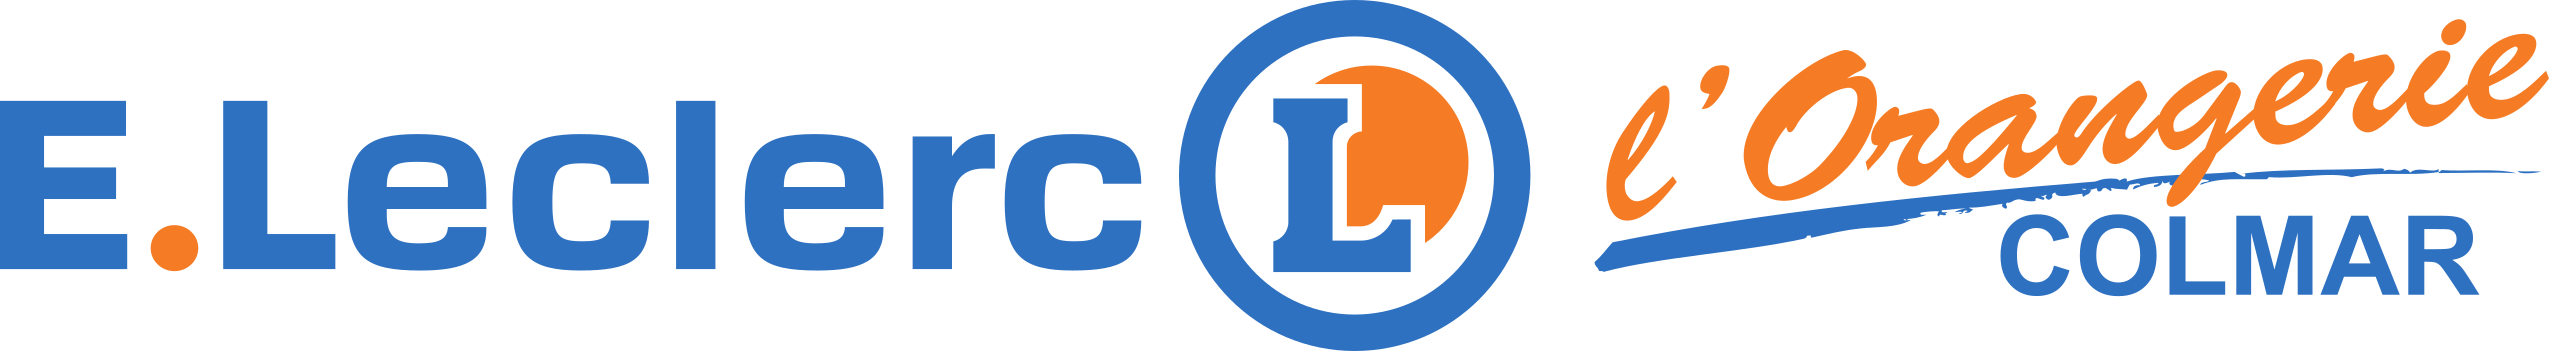 logo Leclerc orangerie1